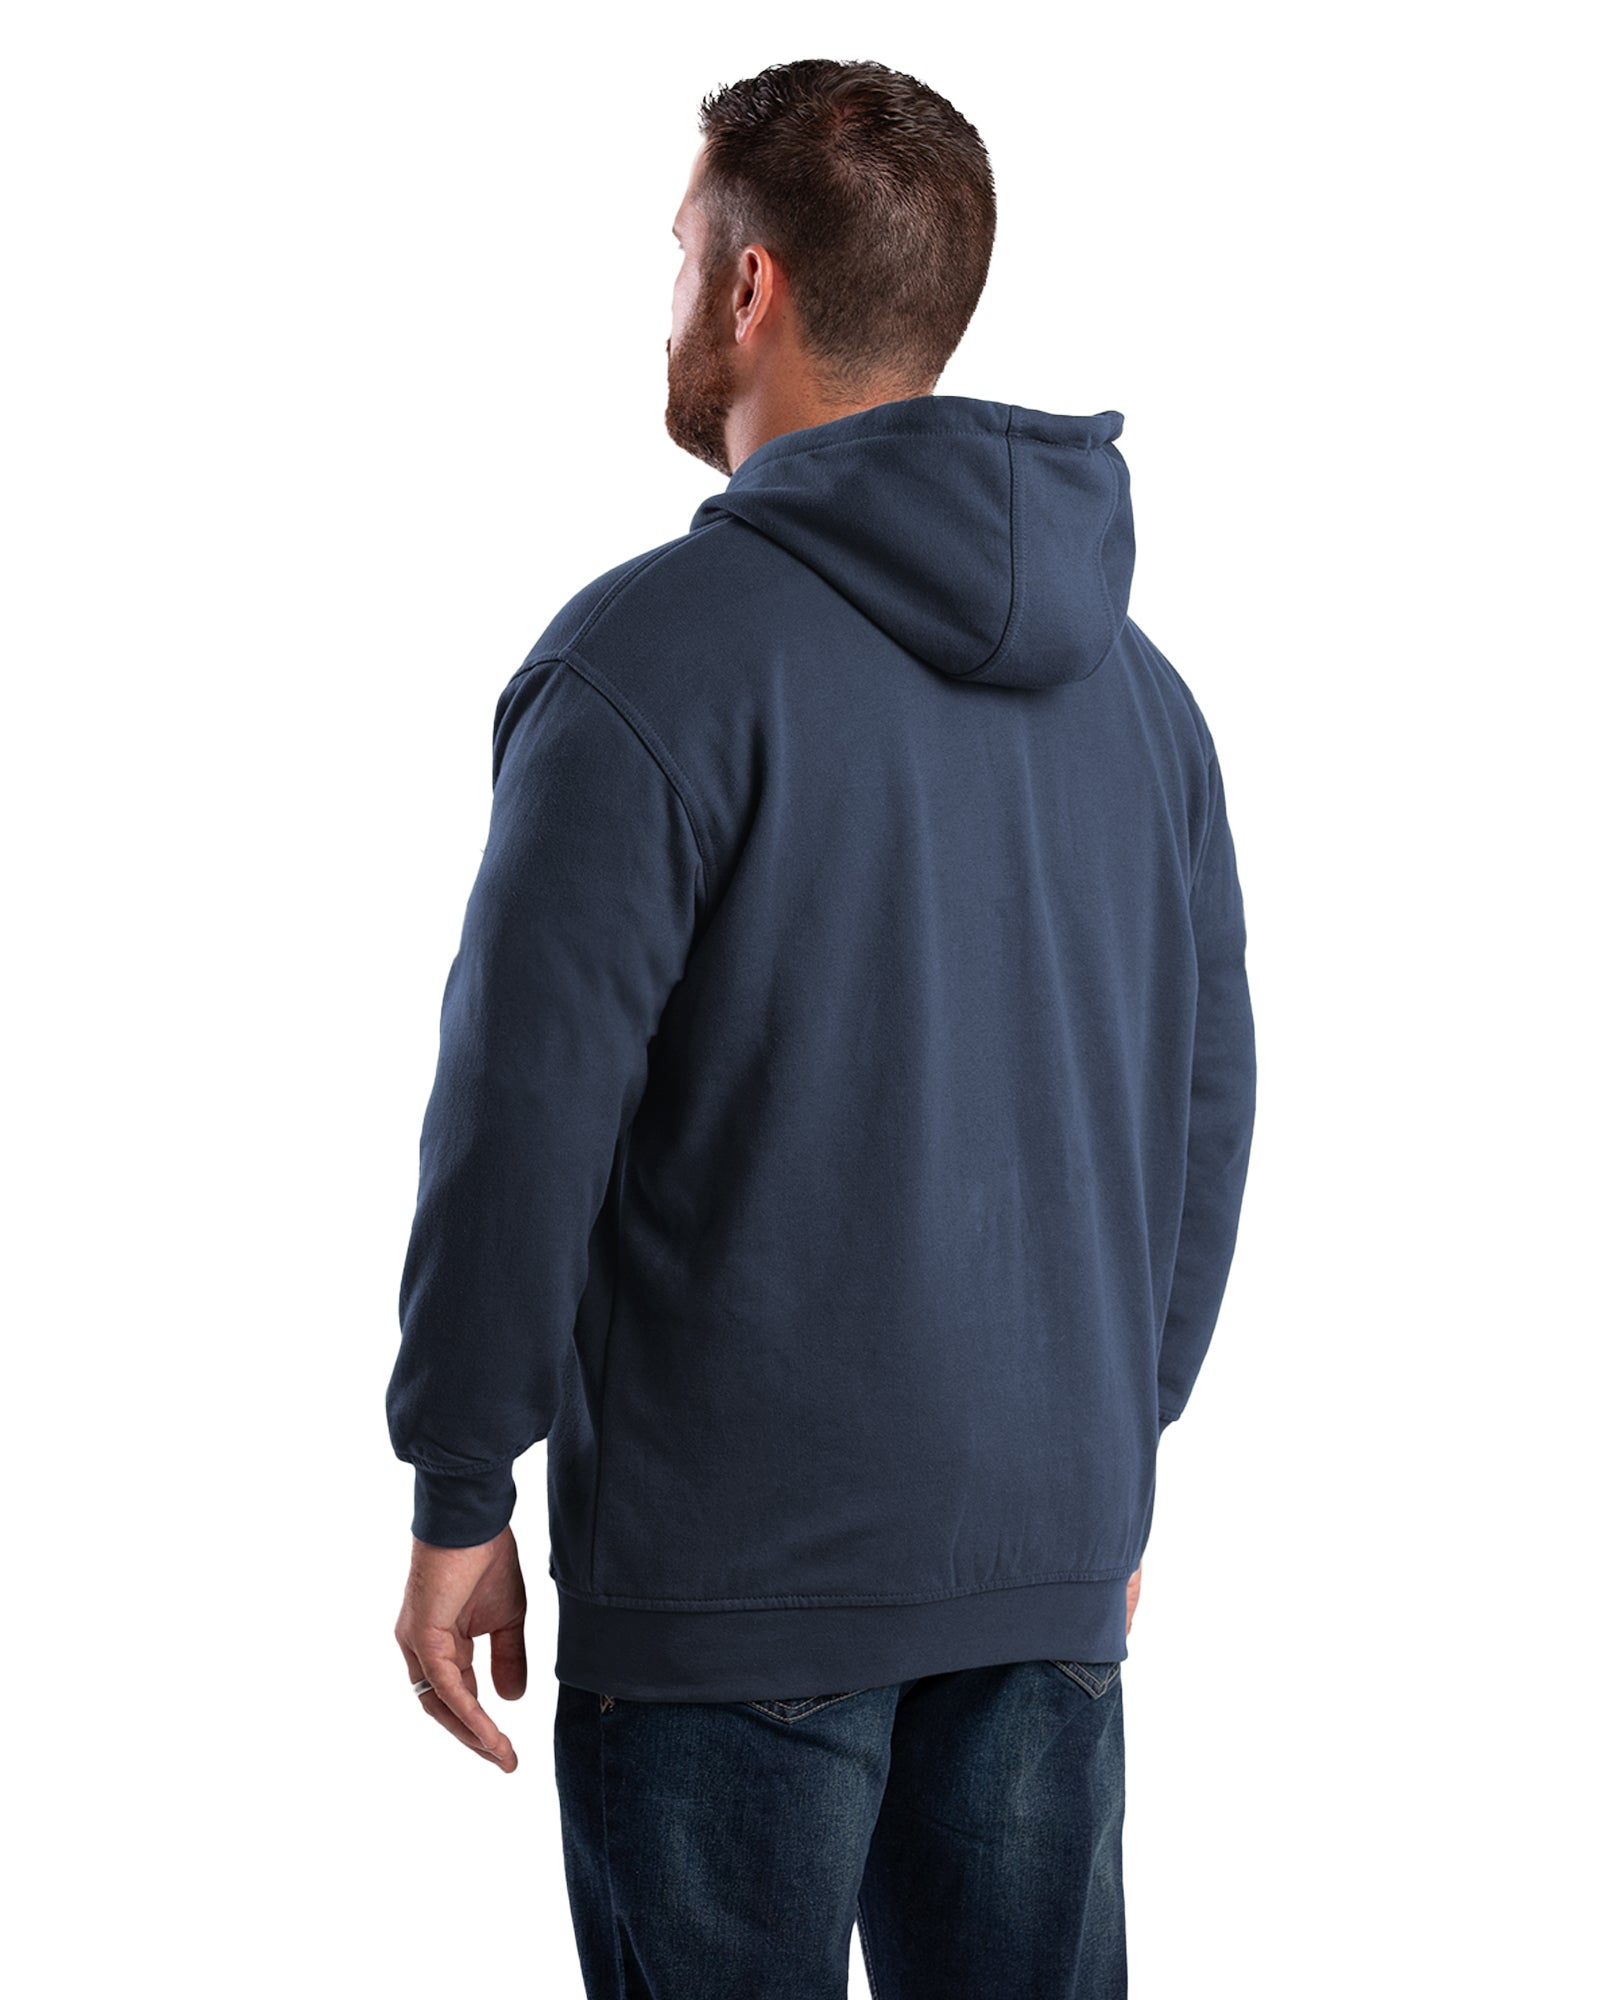 Thermal Lined Sweatshirt (487)